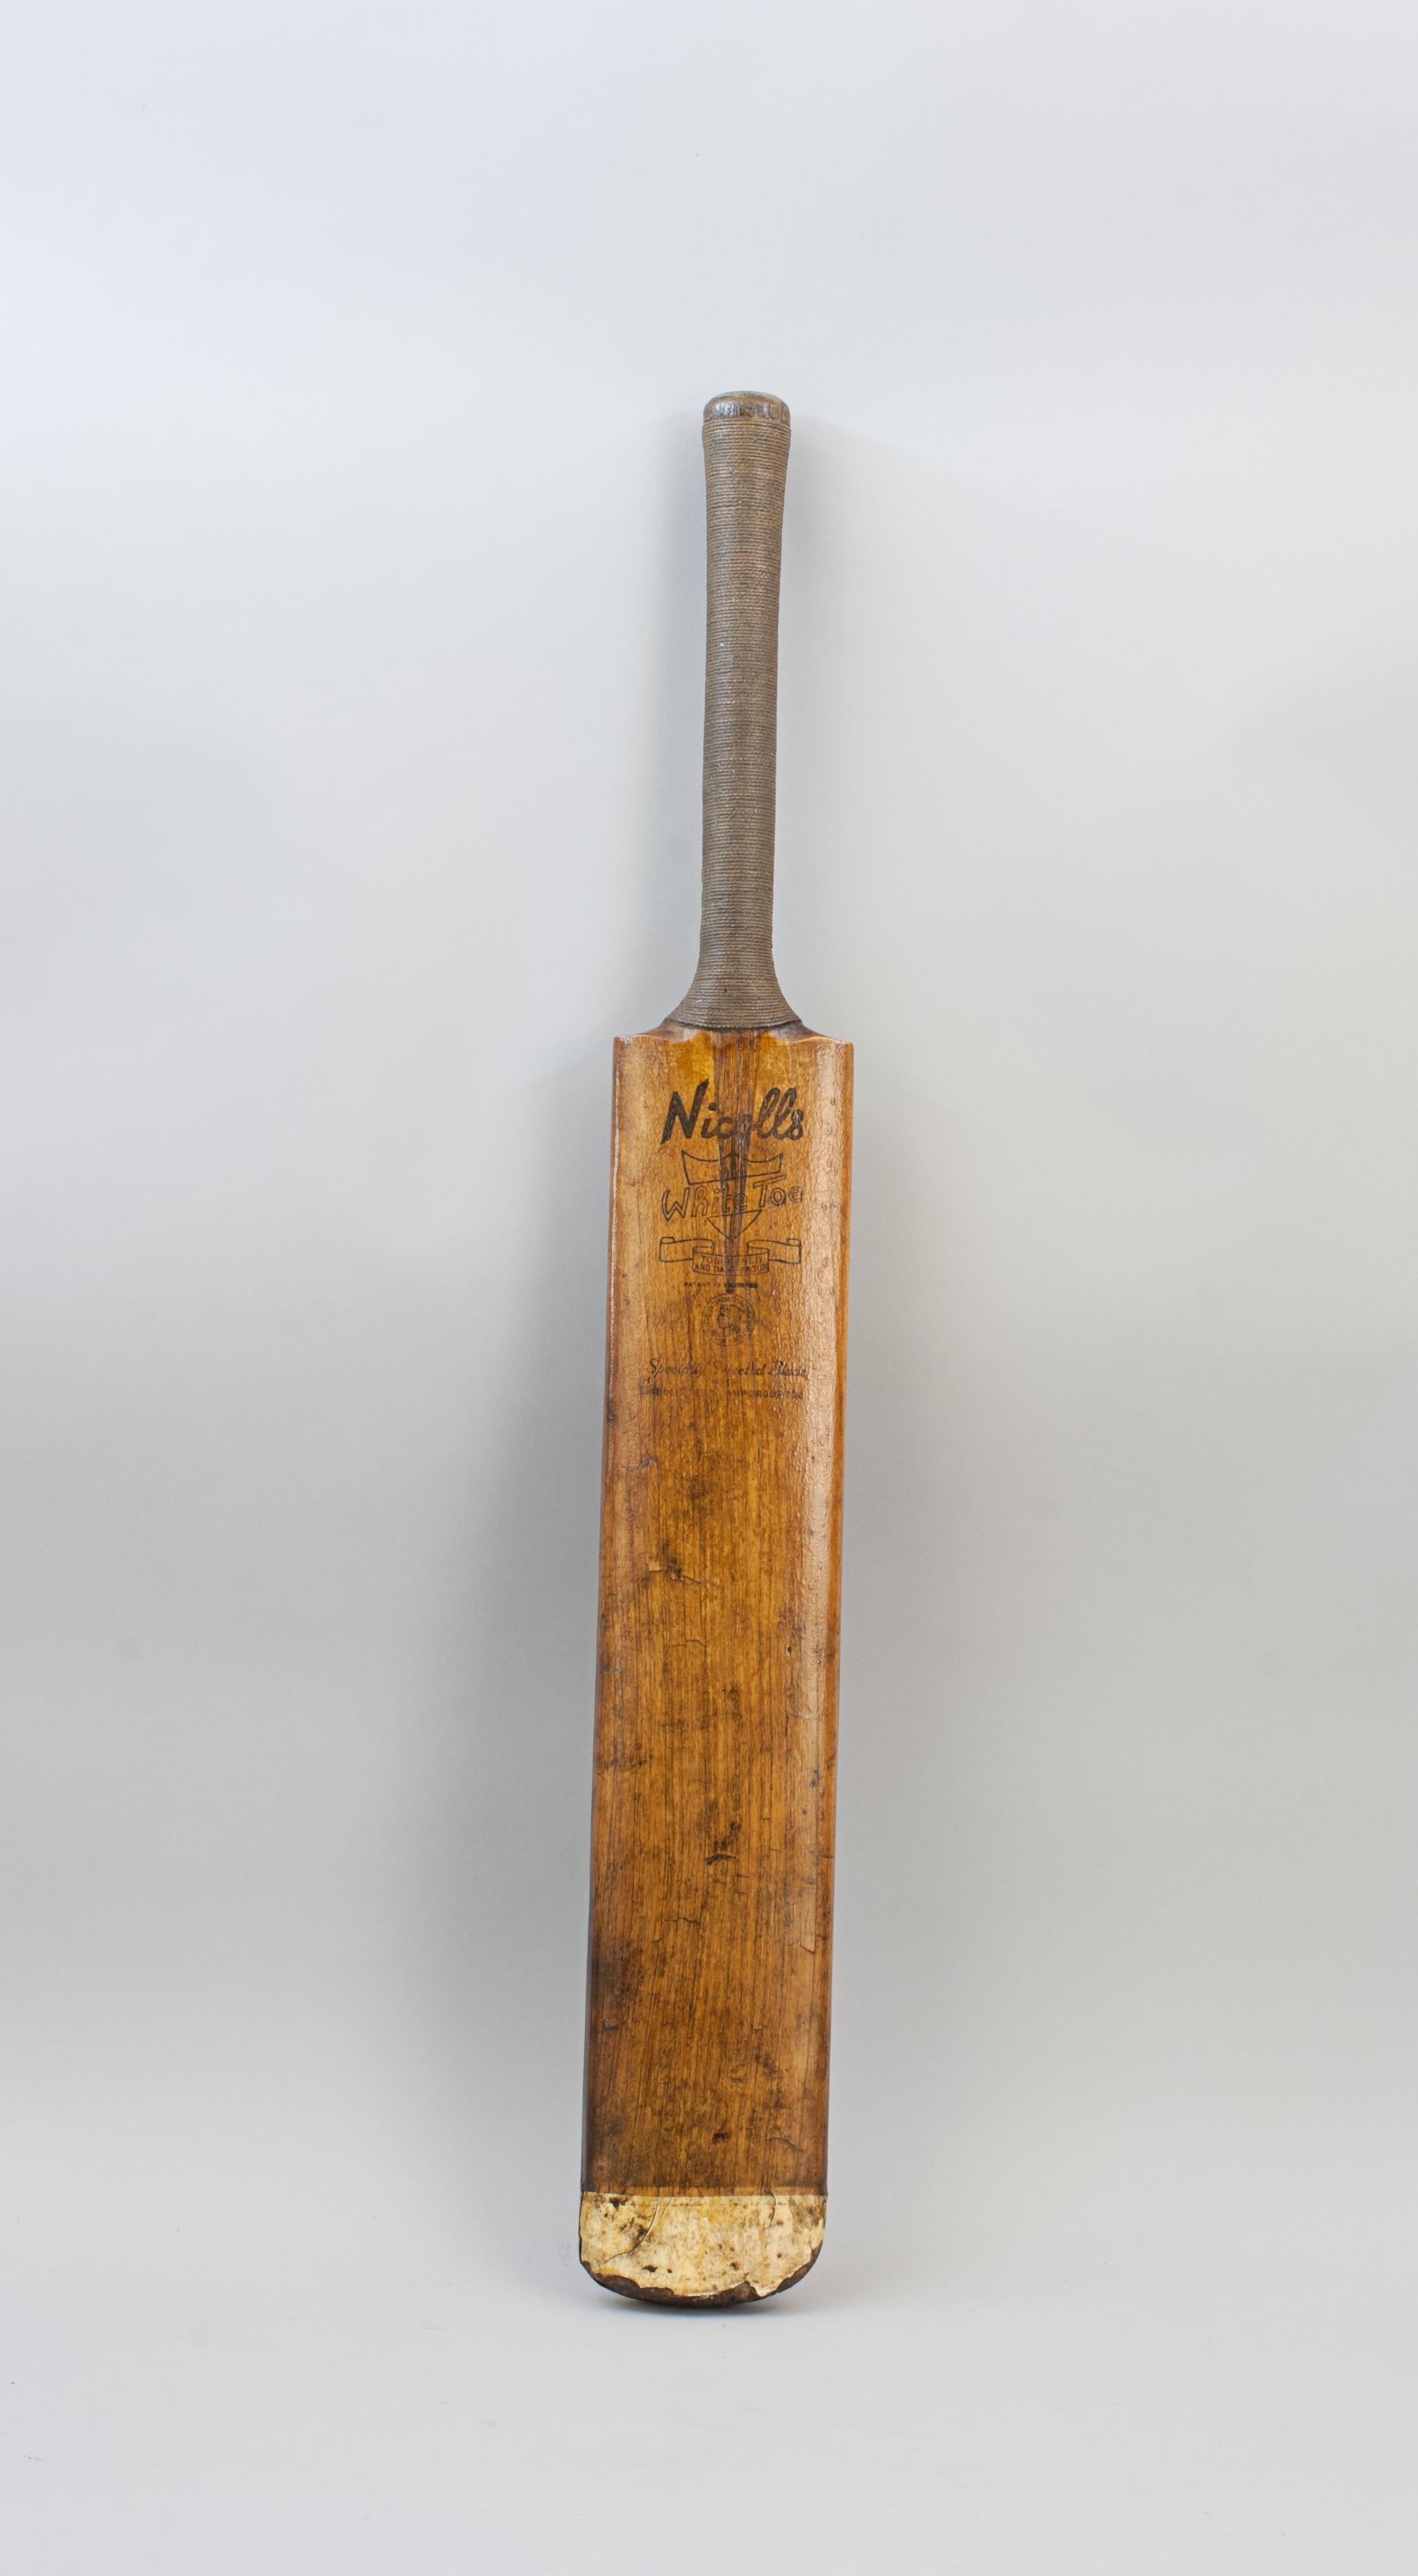  Vintage Cricket Bat, Nicolls 'White Toe' For Sale 4